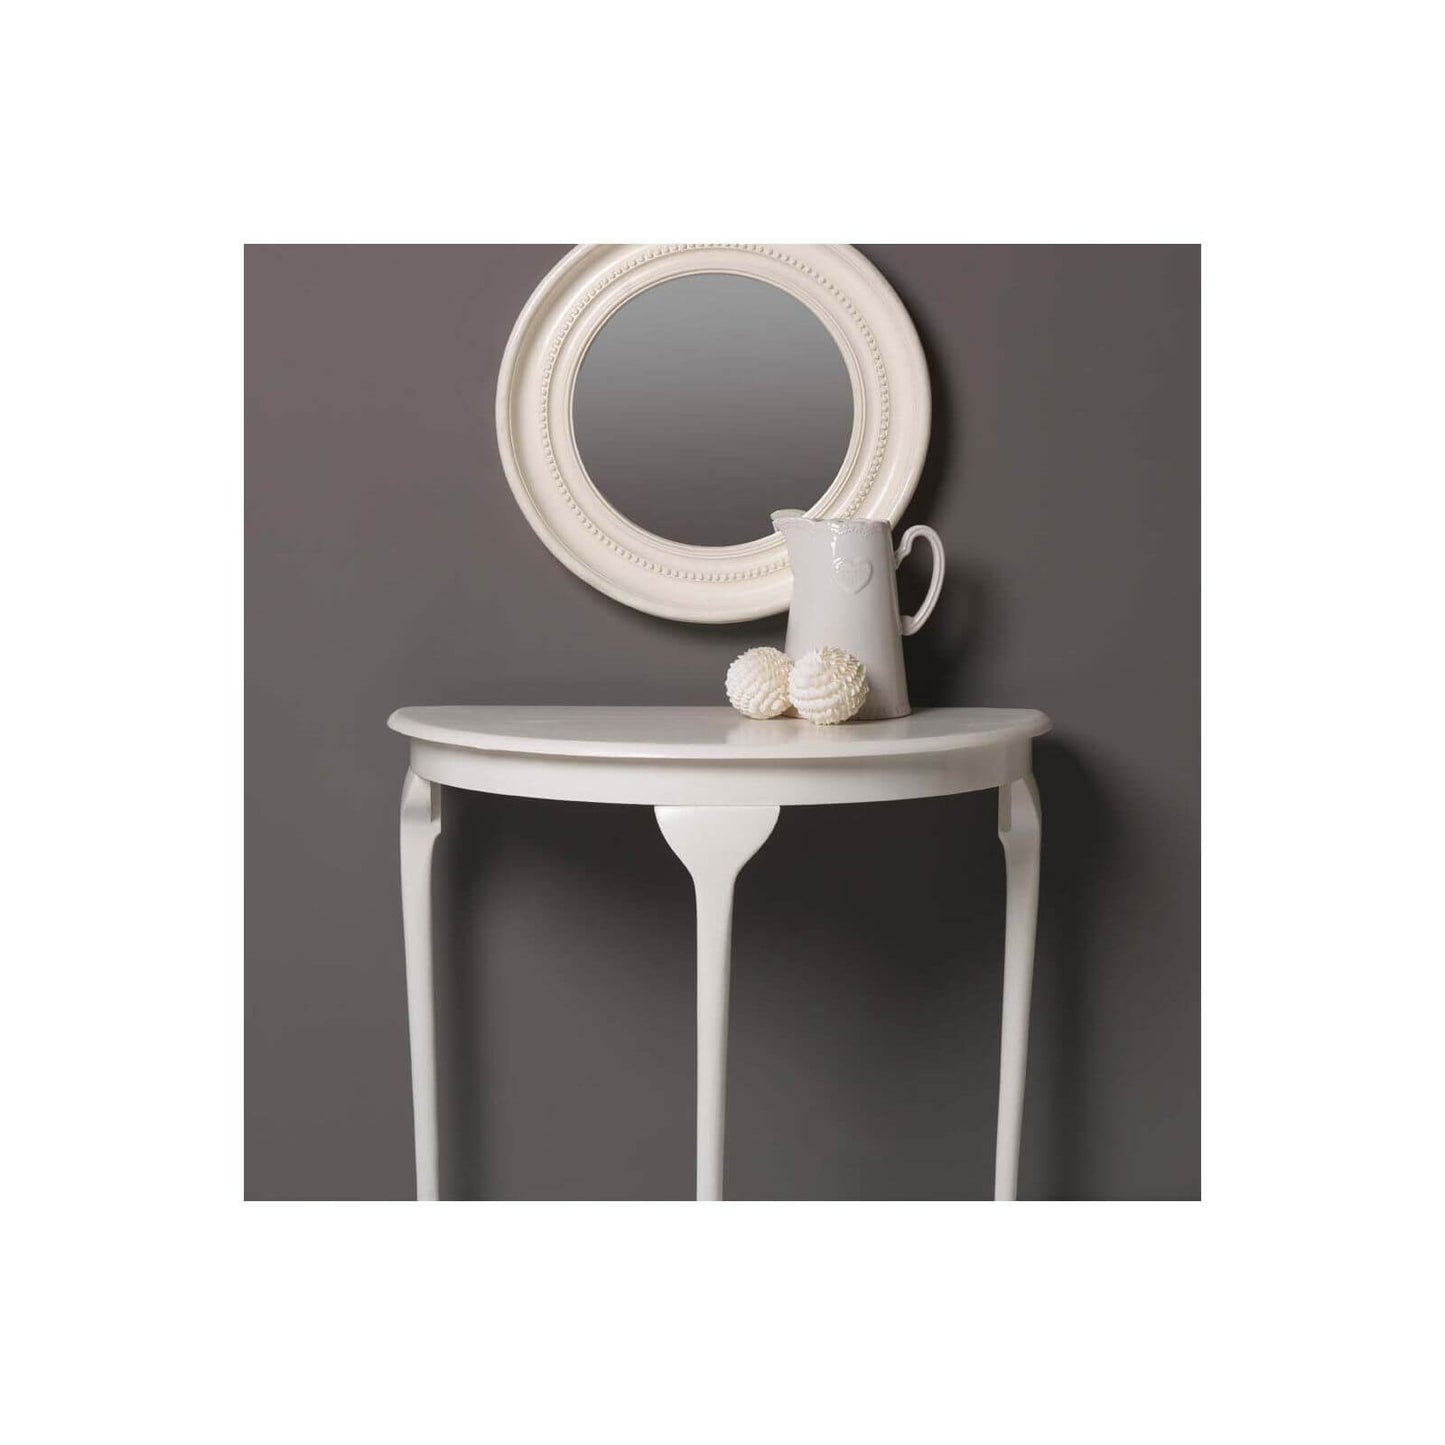 Rust-Oleum Gloss Finish Furniture Paint Porcelain